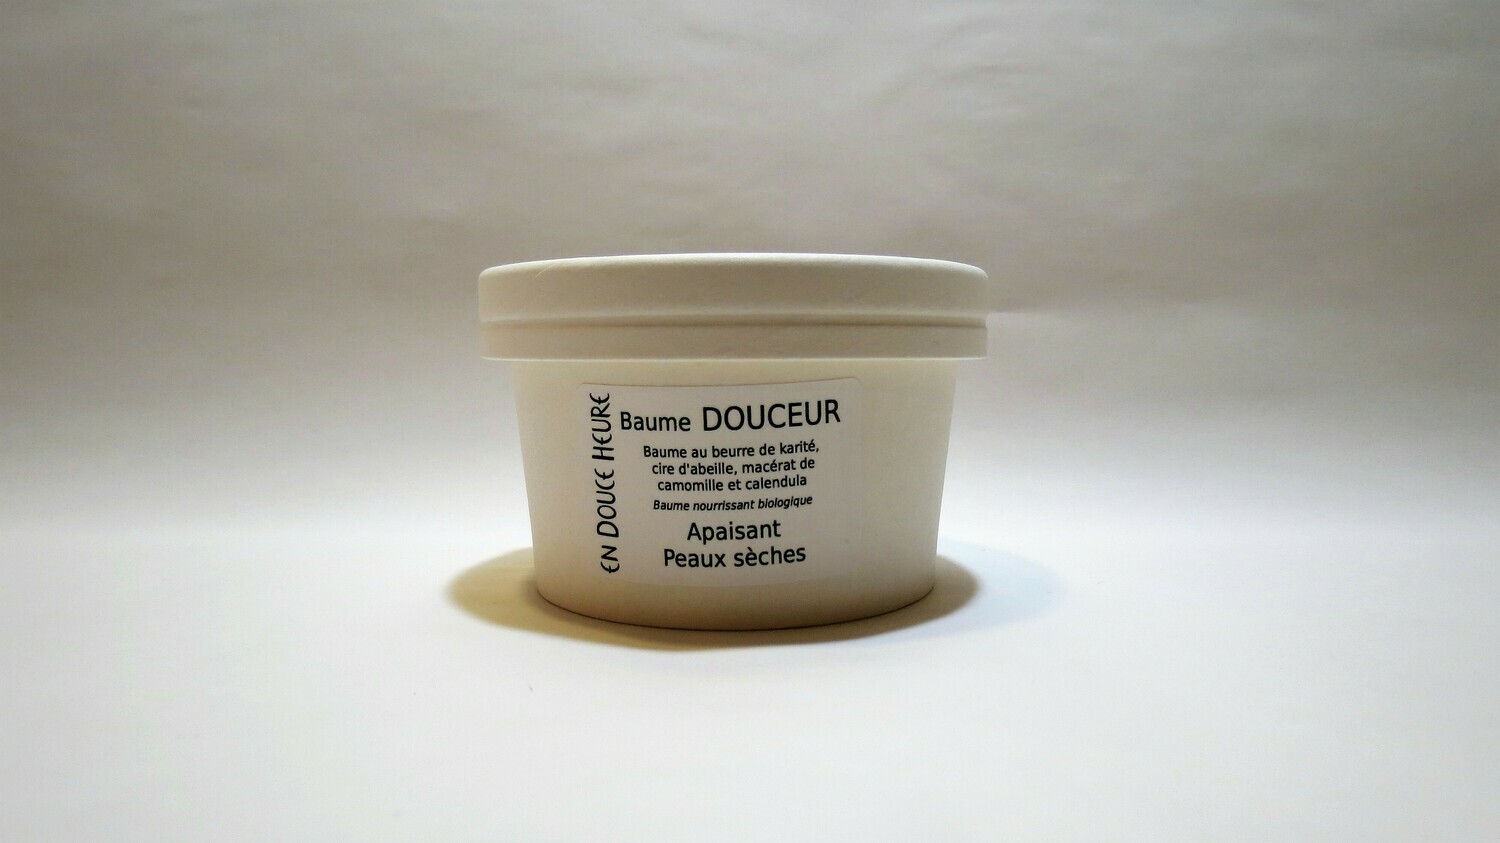 Baume DOUCEUR - Recharge 100g